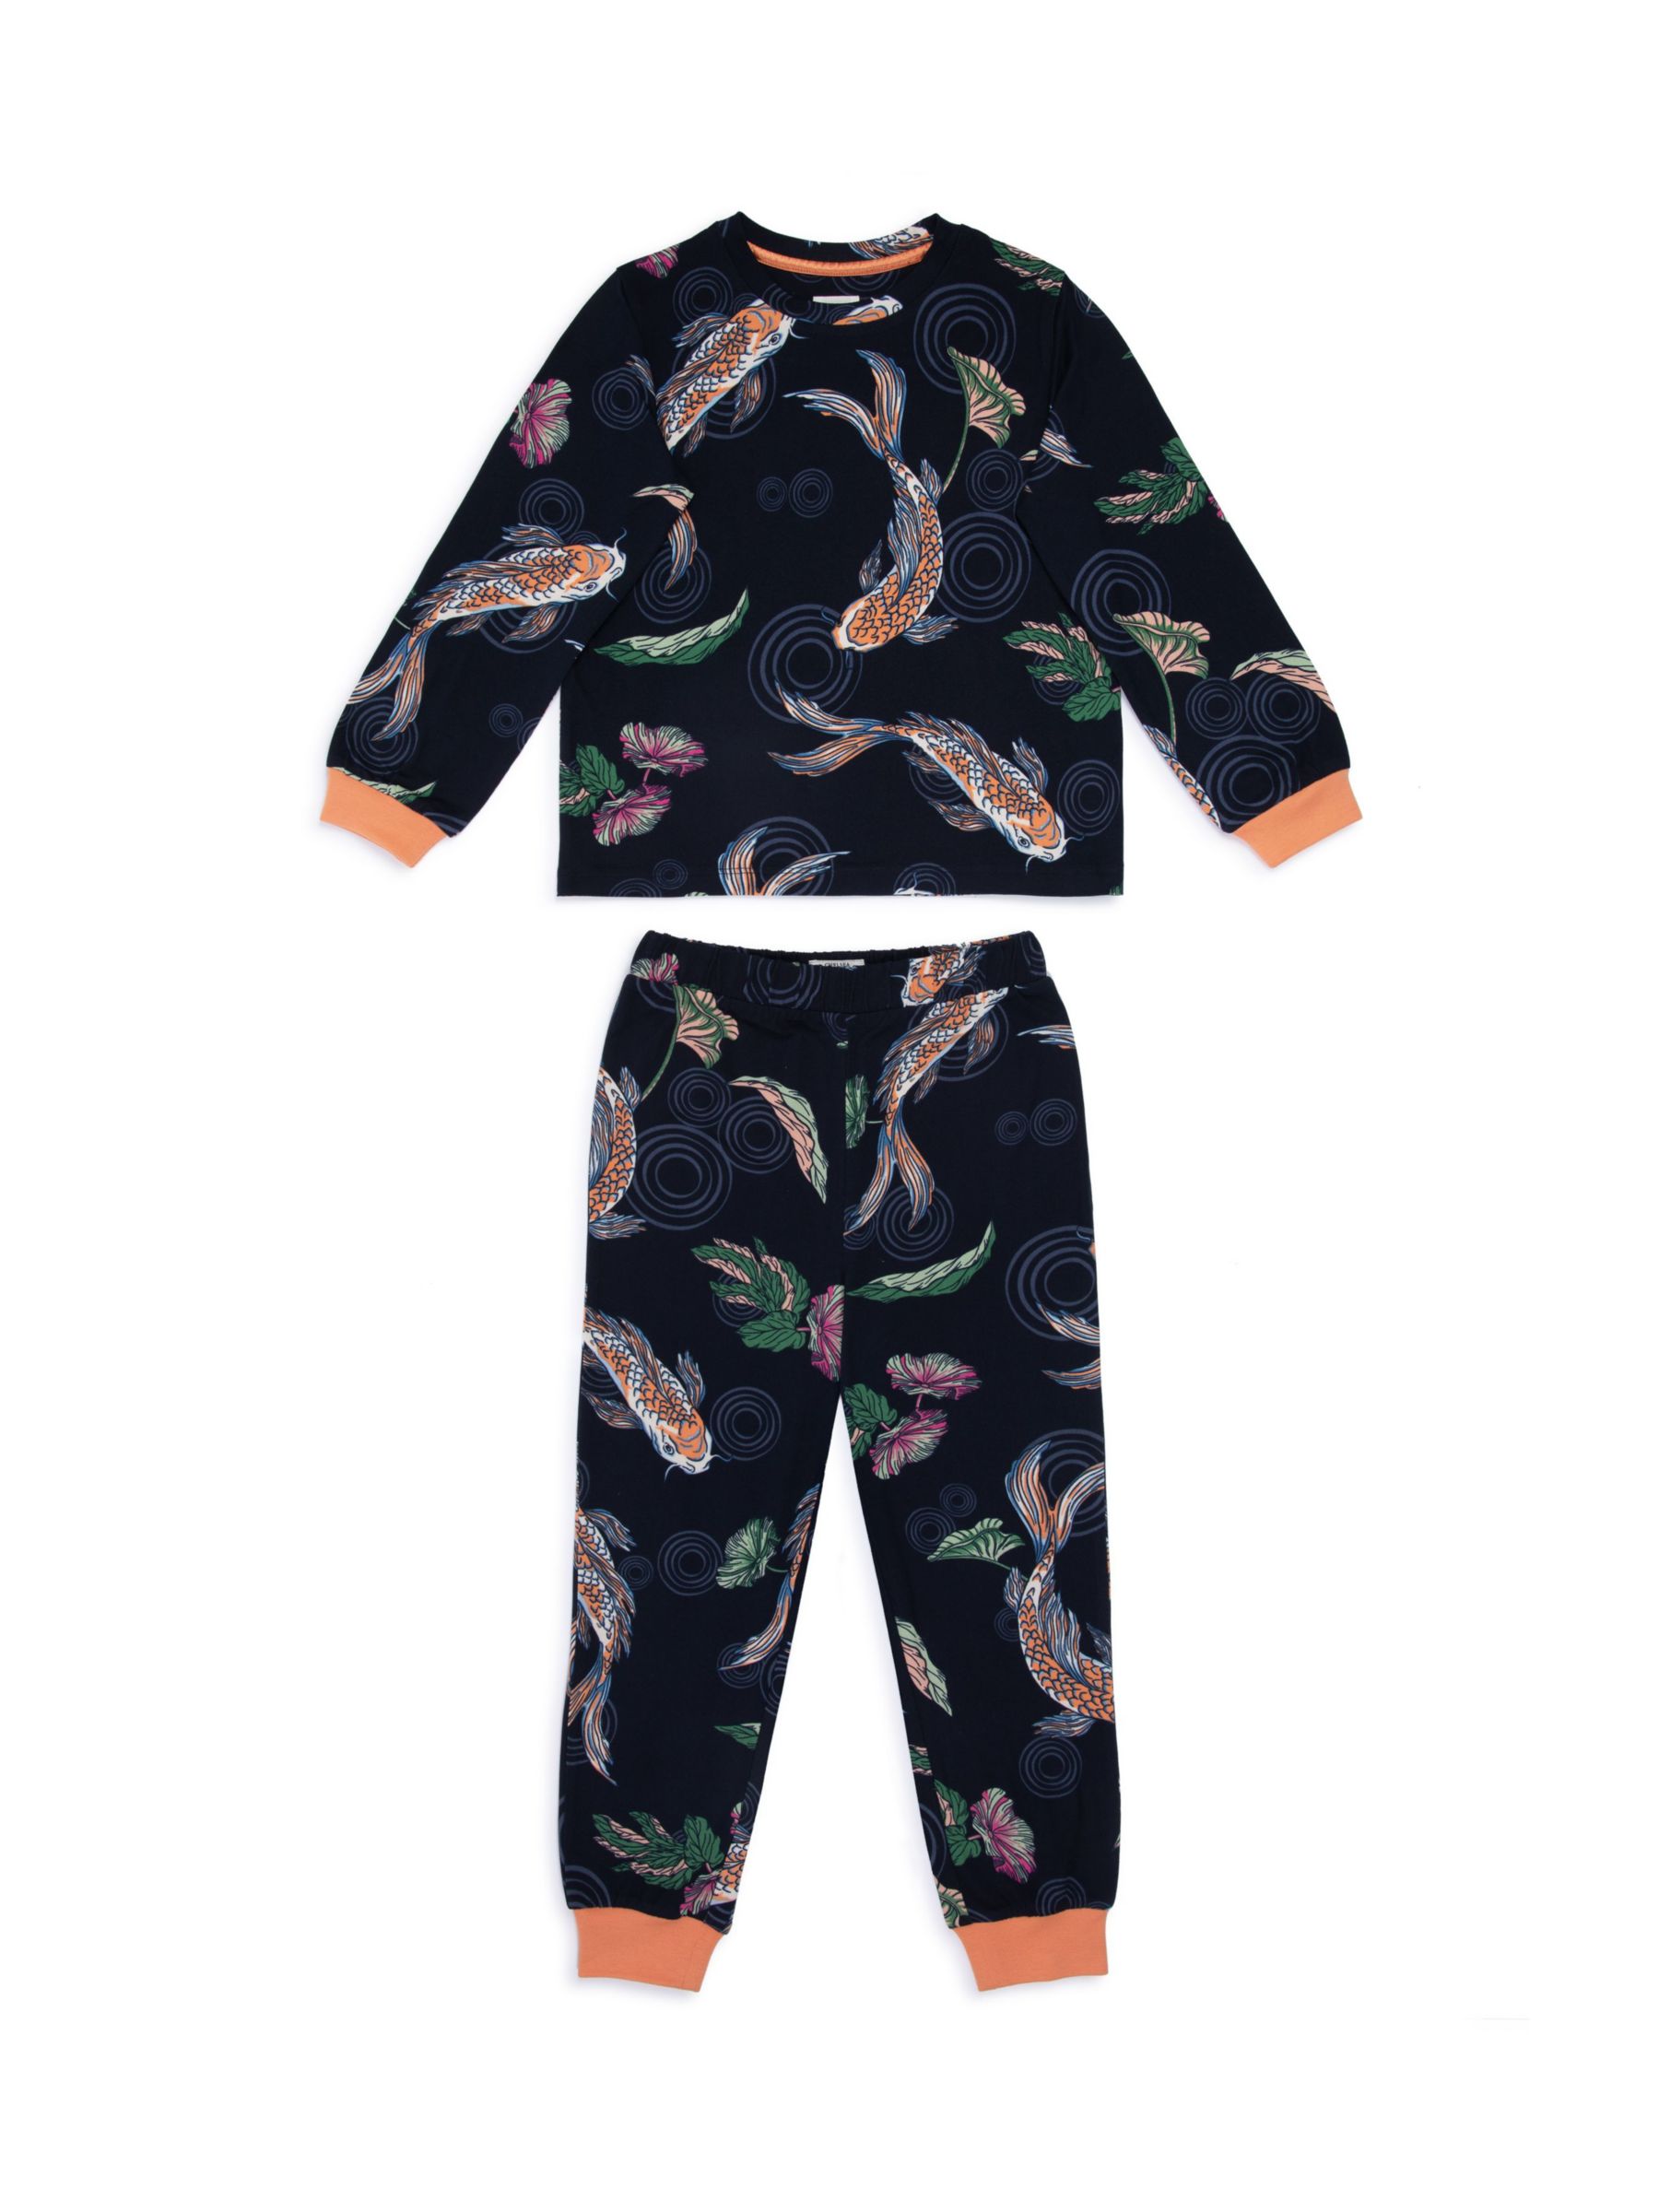 Chelsea Peers Kids' Koi Fish Print Long Pyjama Set, Navy/Multi, 1-2 years